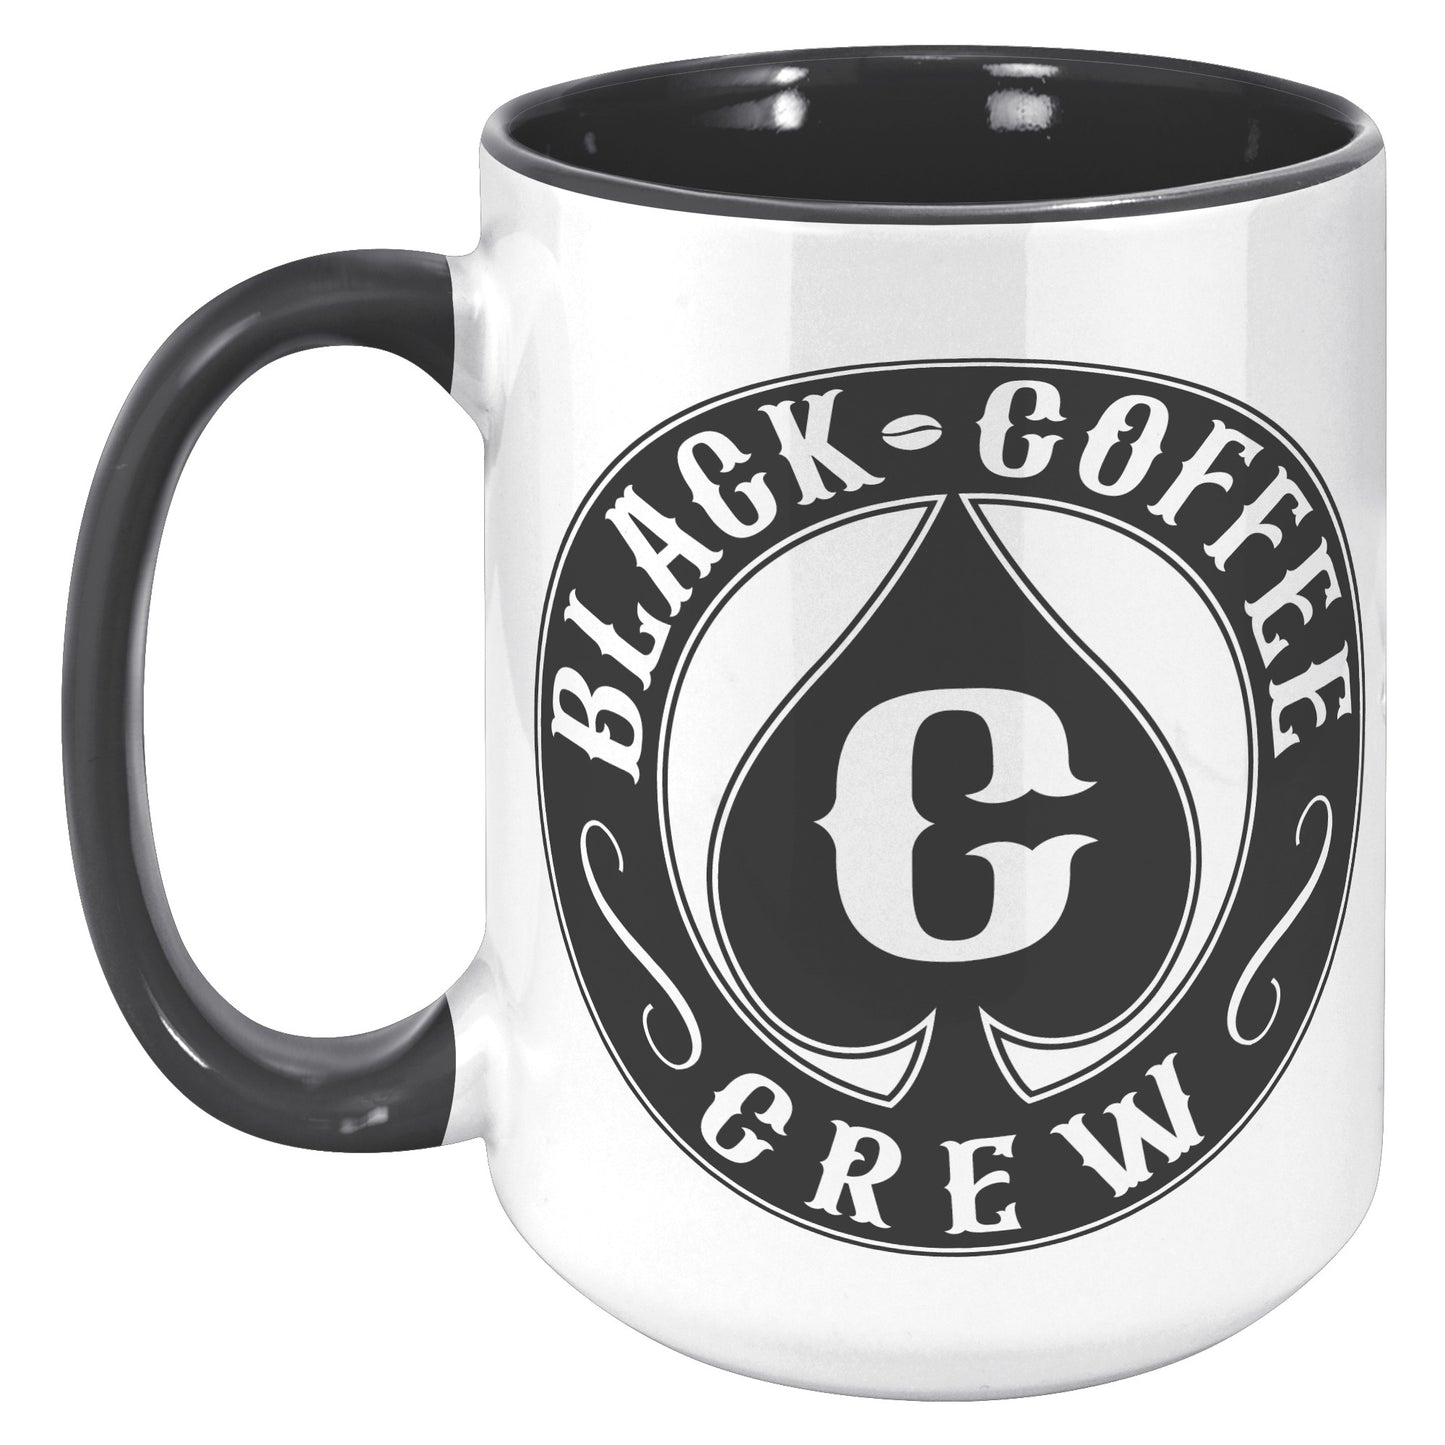 BLACK COFFEE CREW MUG